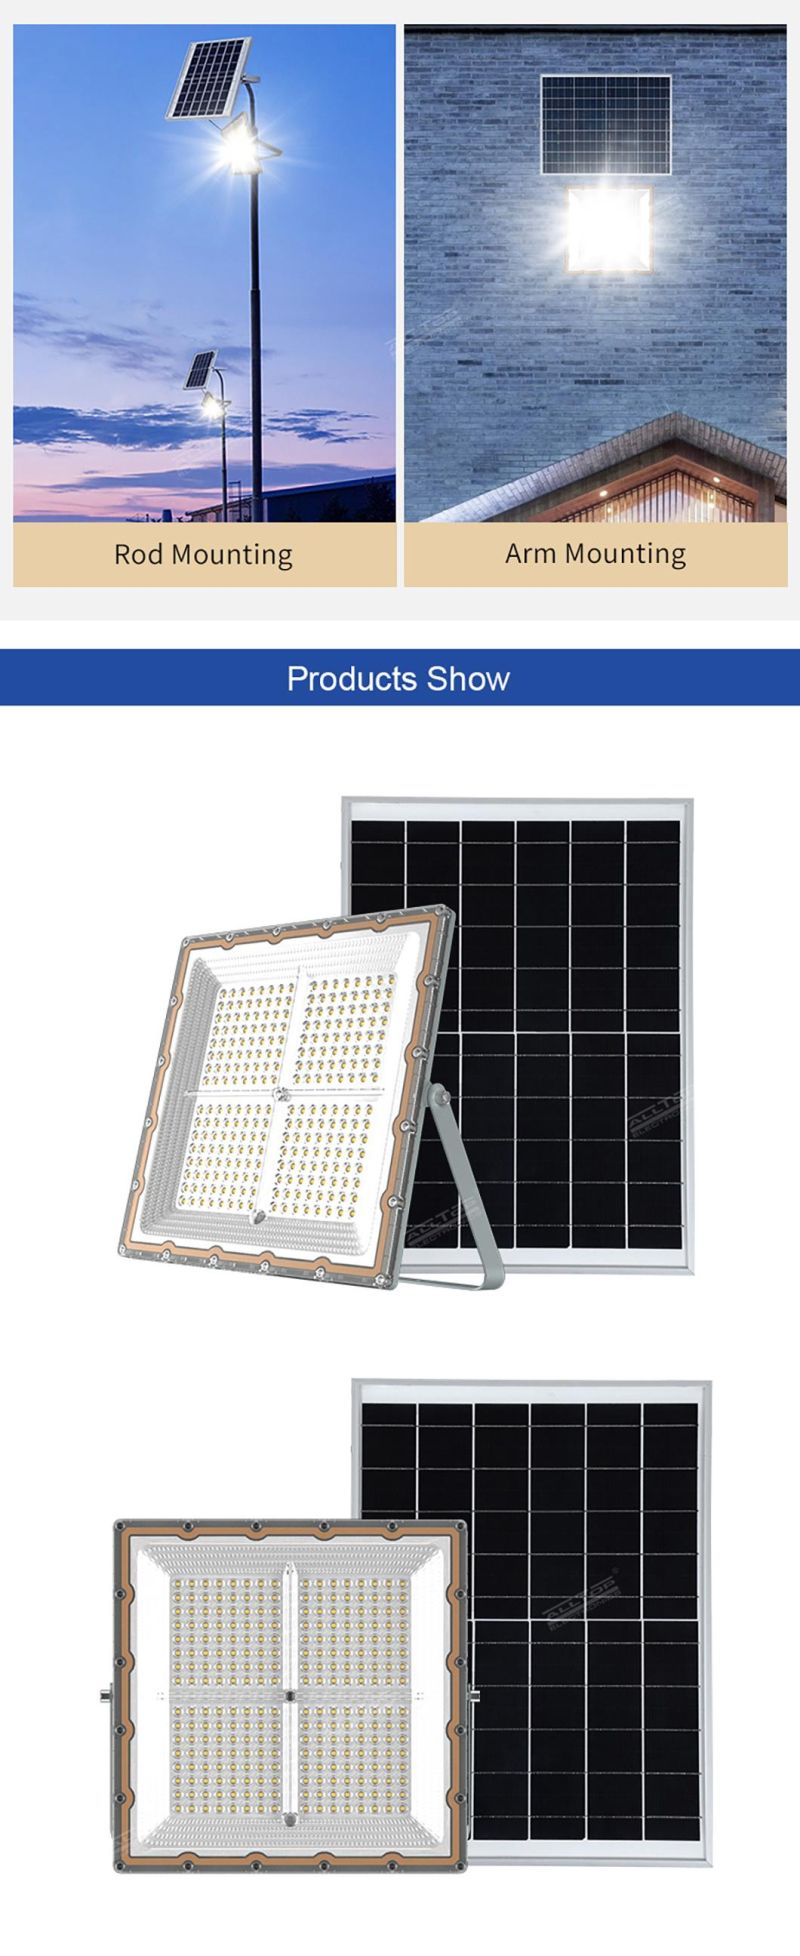 Alltop High Performance SMD Aluminum 150W Waterproof IP65 Outdoor Solar Panel LED Flood Lights